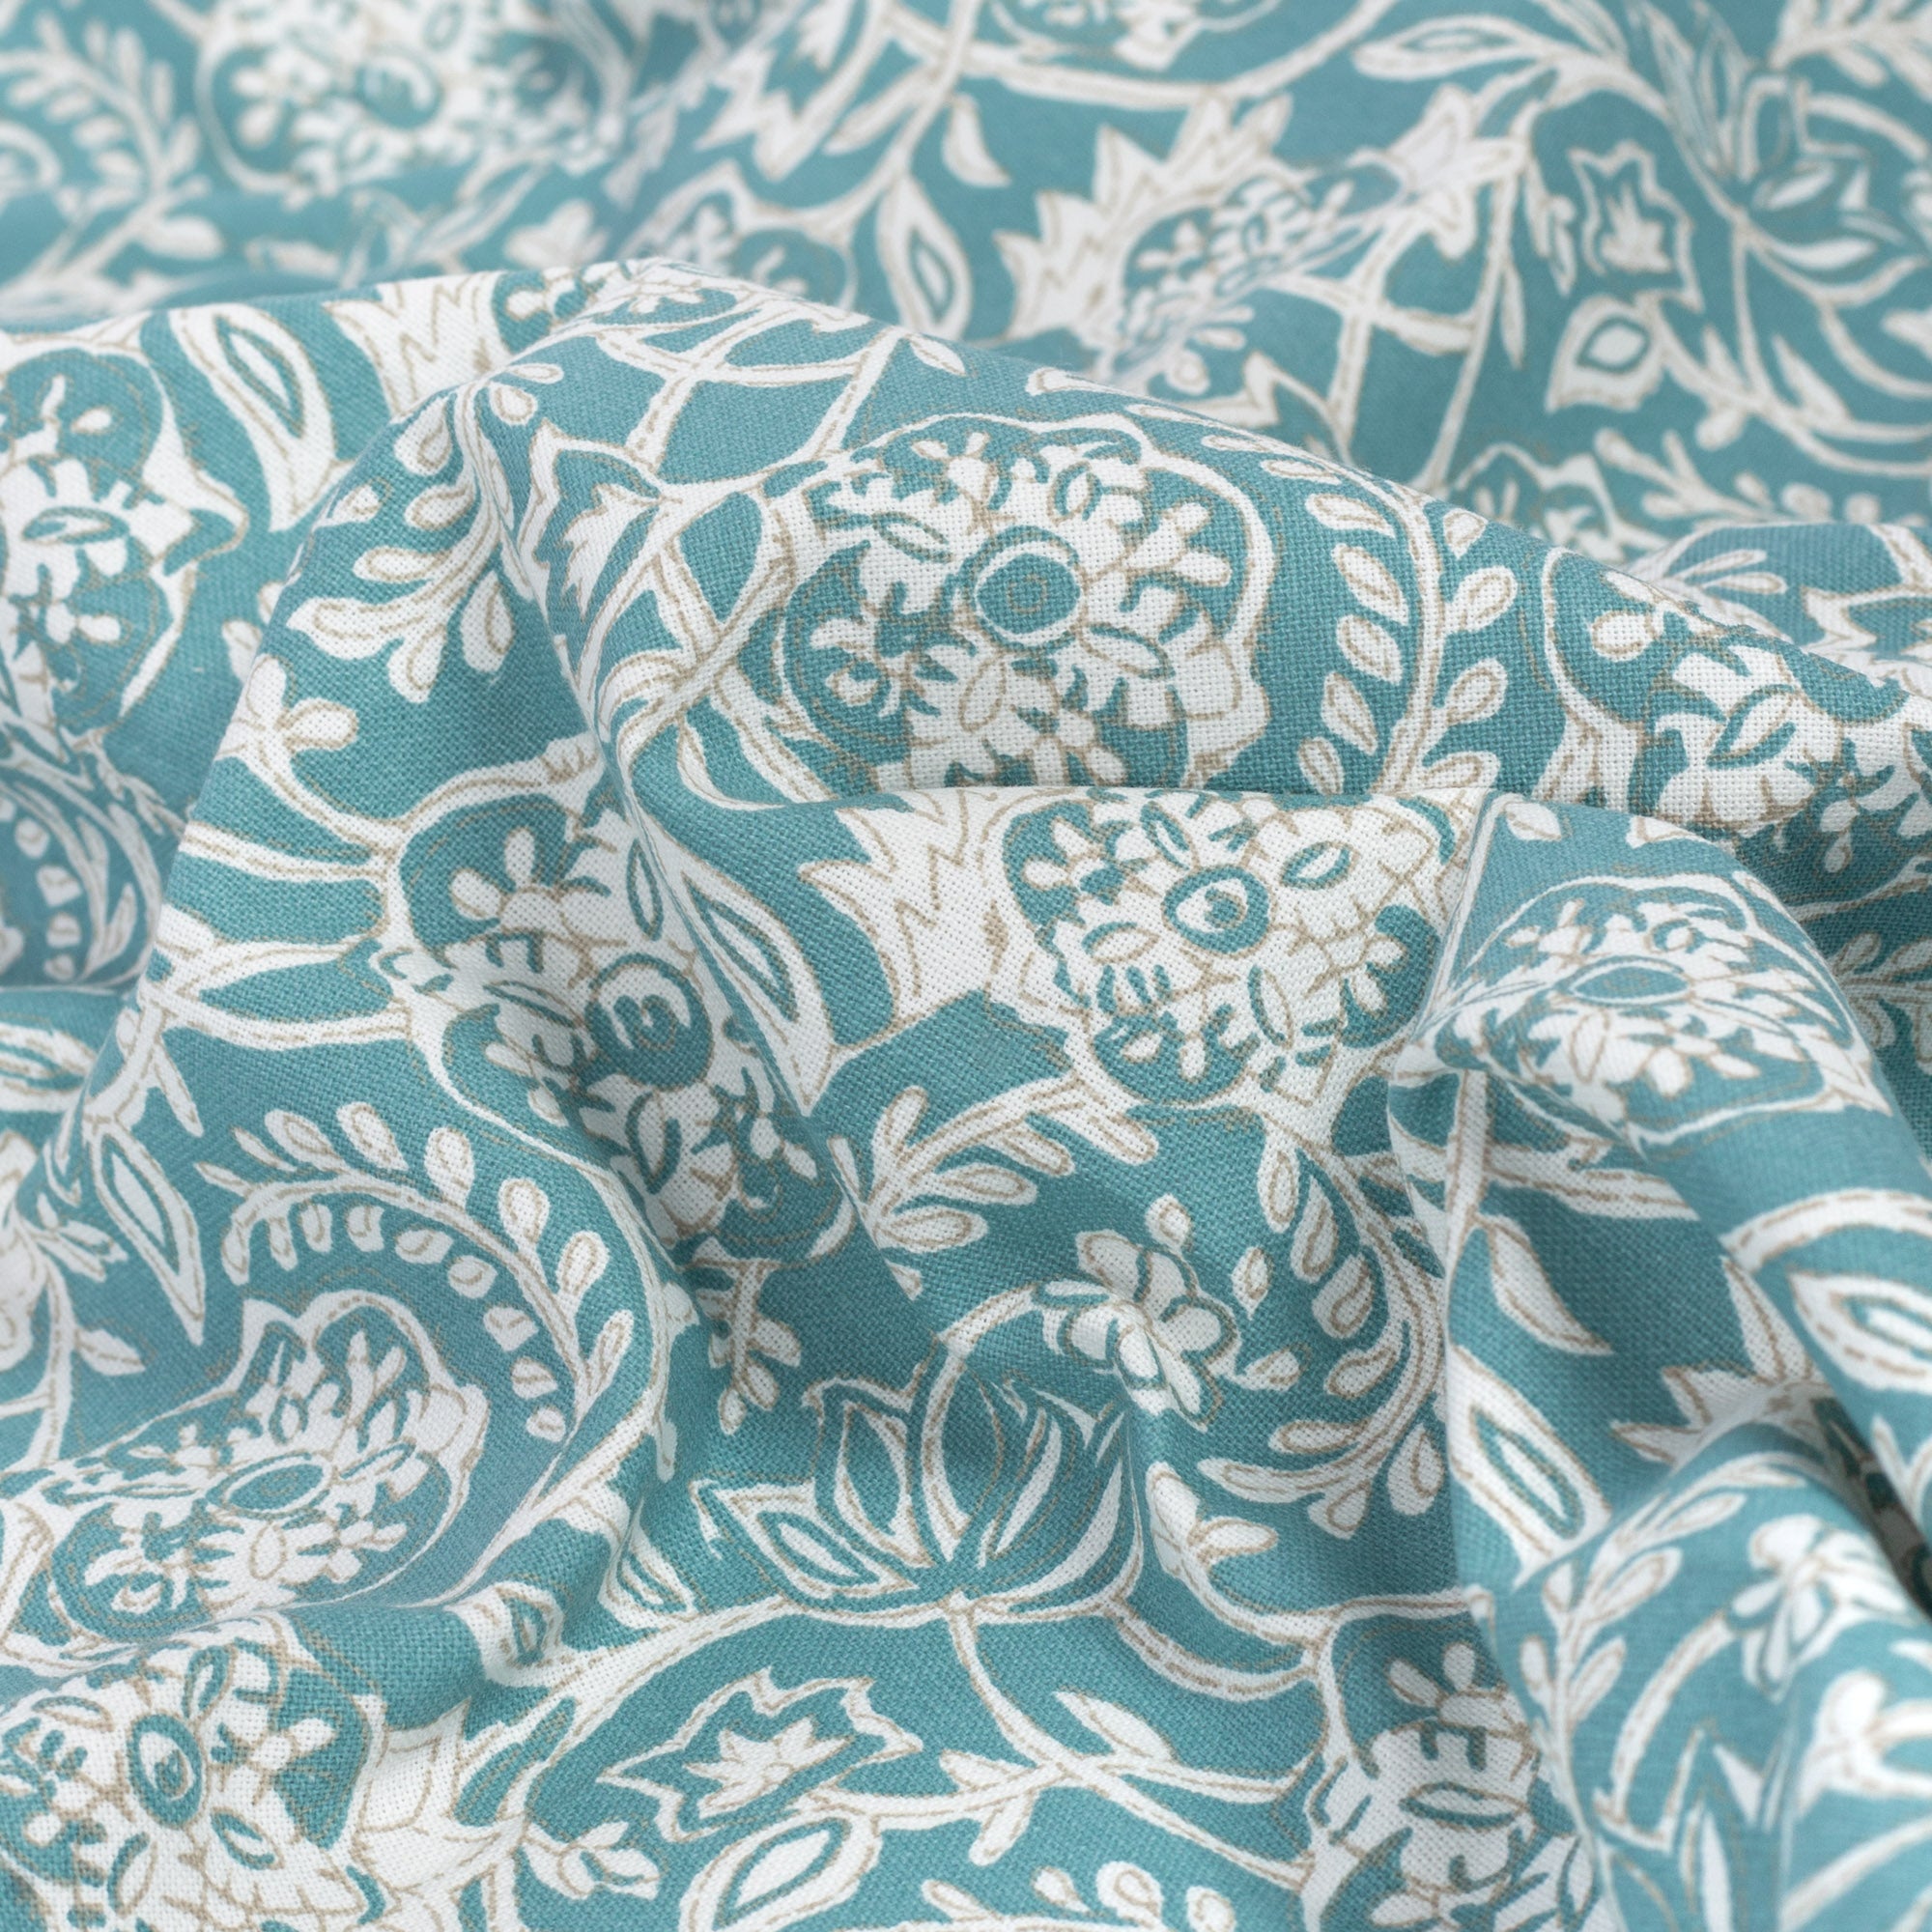 Padma Aqua, a tapestry block print pattern cotton fabric : close up view